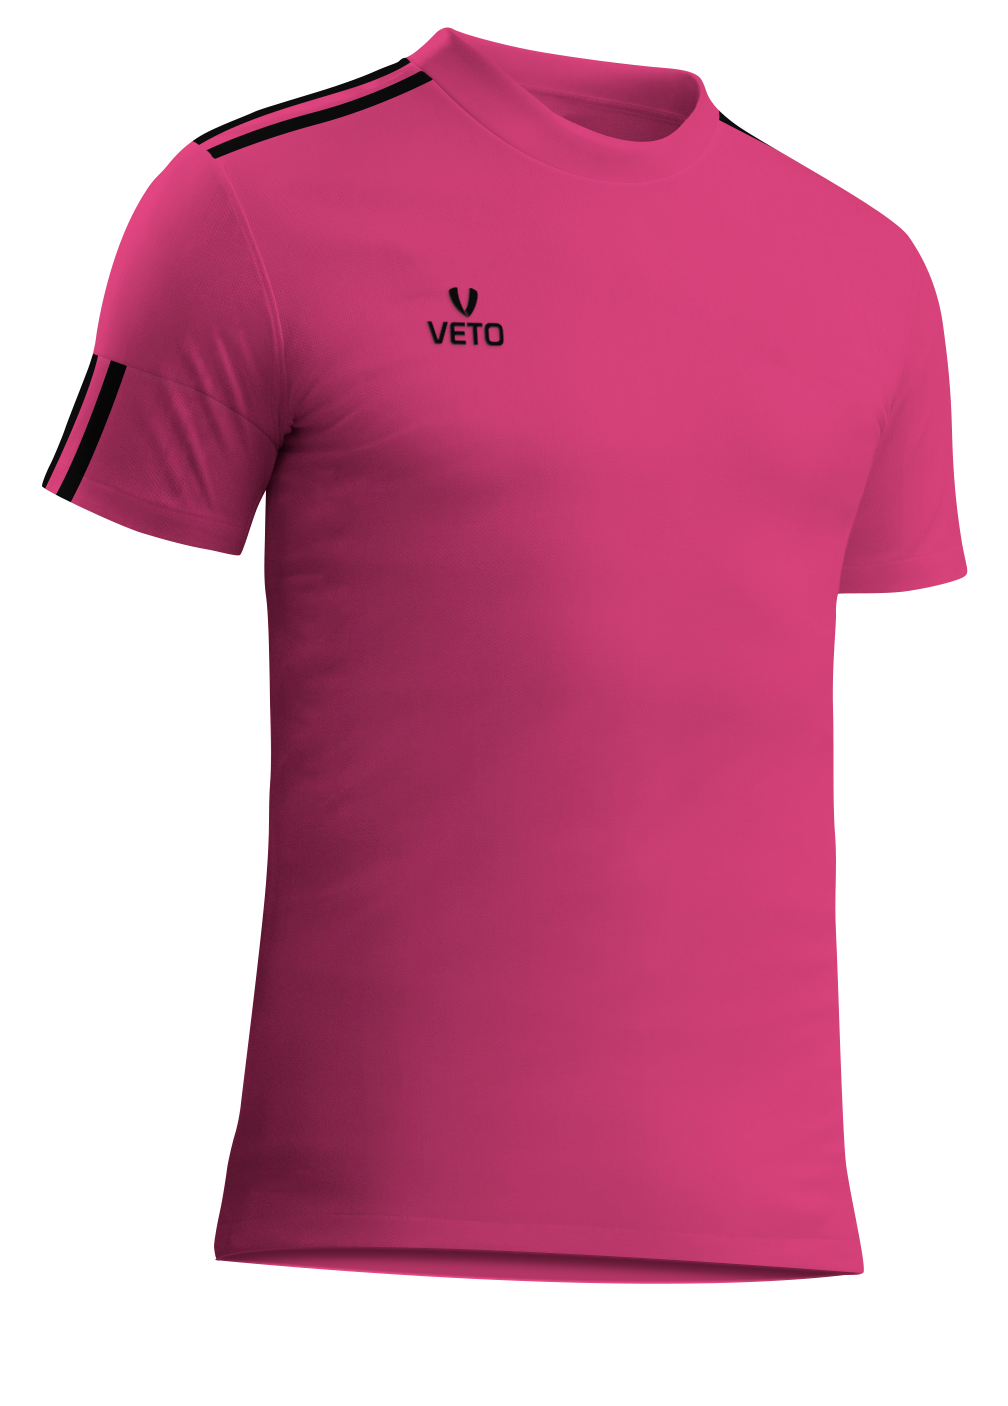 Phoenix Jersey Pink/Black | Veto Sports